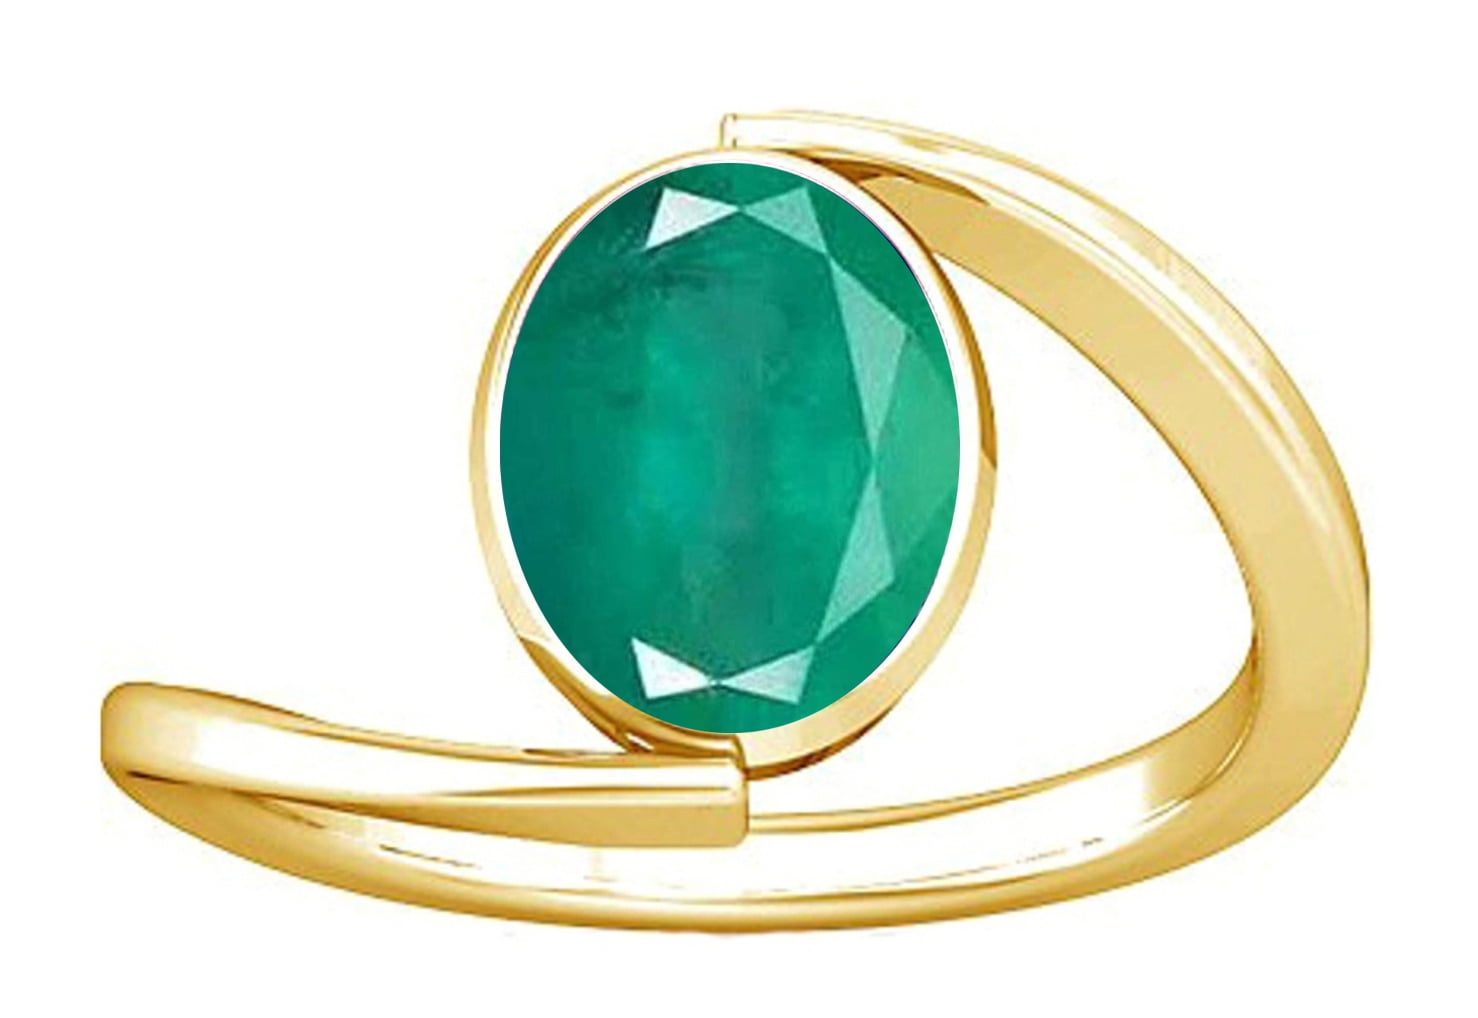 1 Gram Gold Forming Green Stone With Diamond Delicate Design Ring For Men -  Style A217, सोने की अंगूठी - Soni Fashion, Rajkot | ID: 26090597073